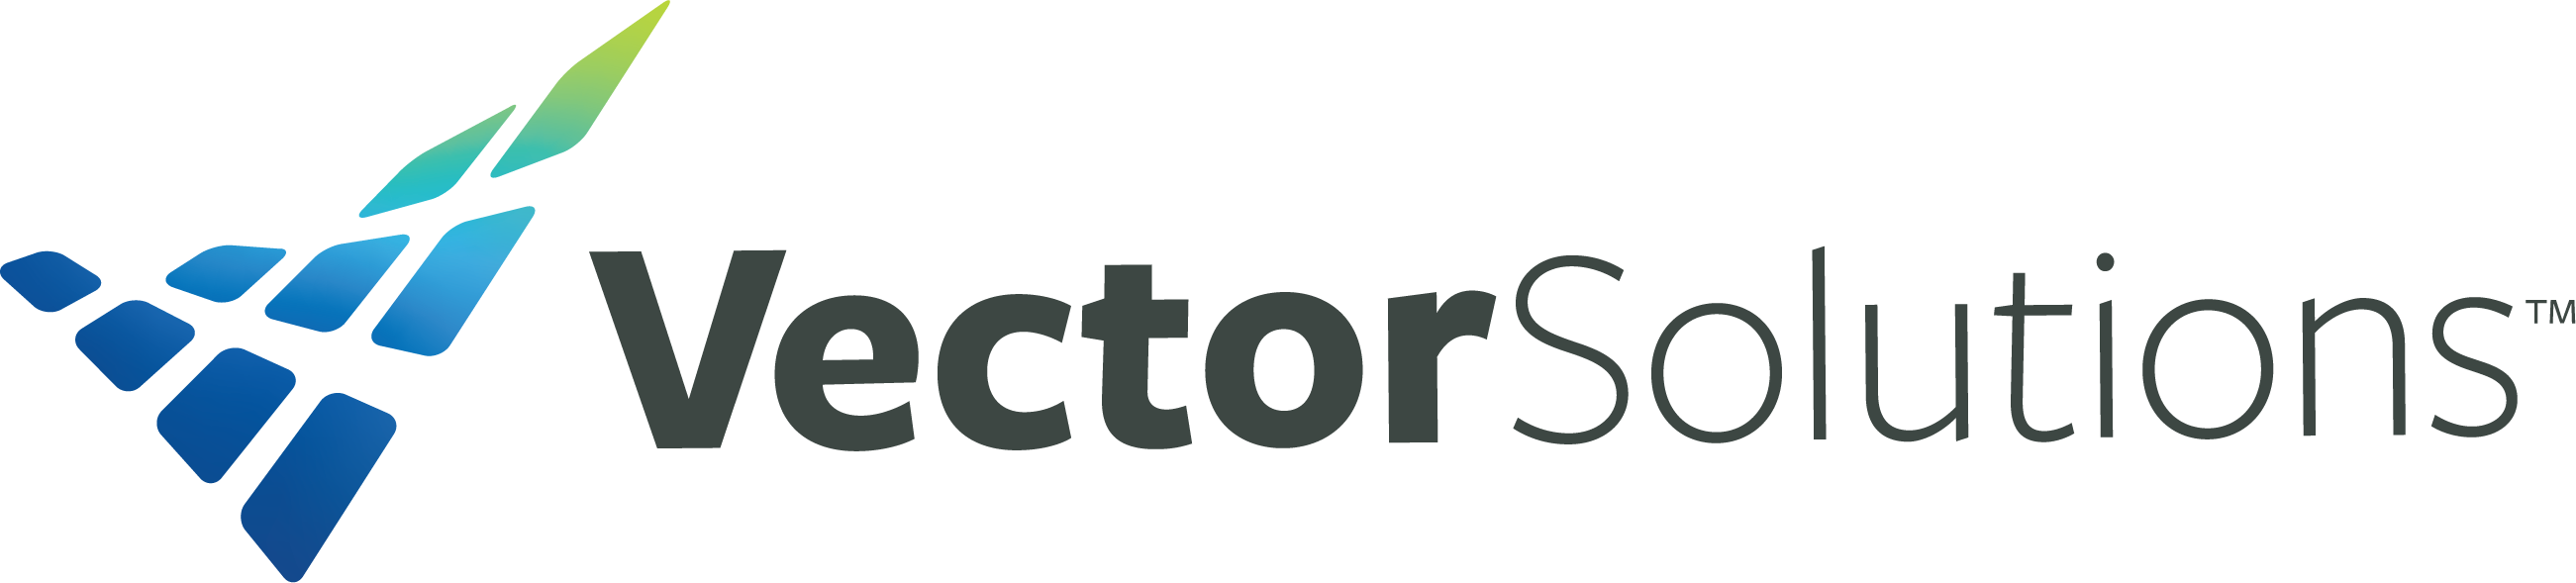 Vector Solutions Company Logo